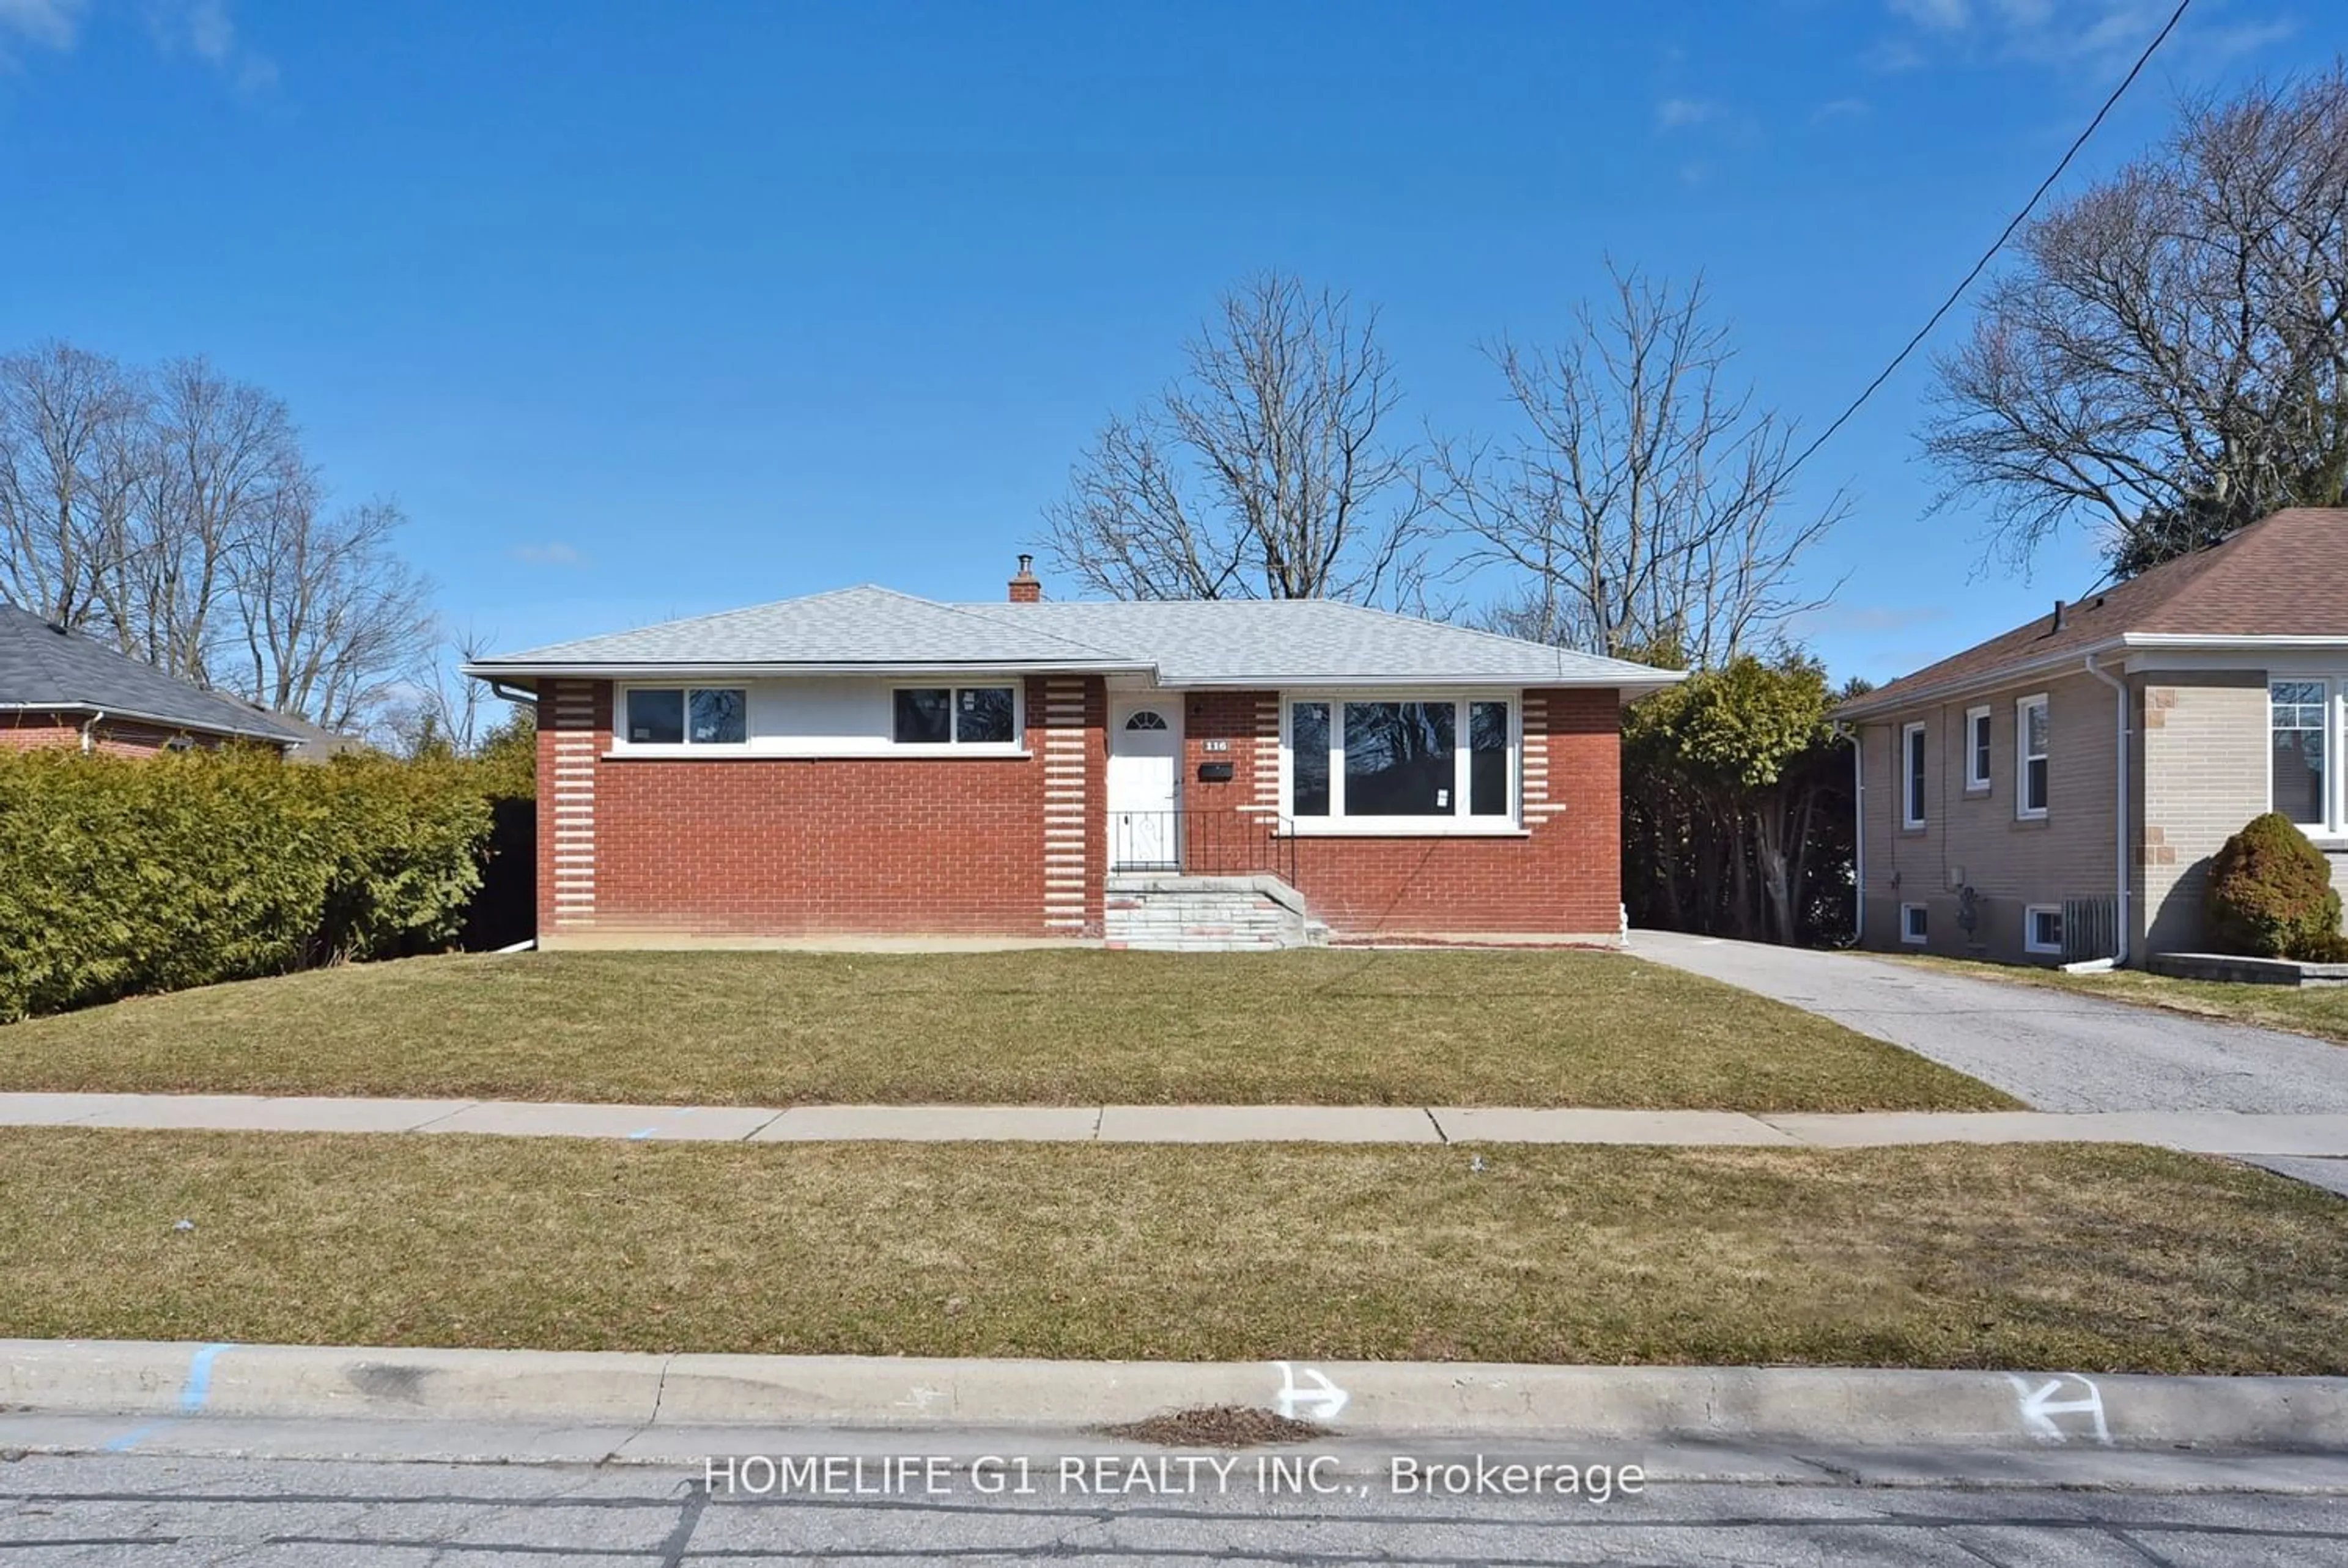 Home with brick exterior material for 116 Pontiac Ave, Oshawa Ontario L1G 3M2